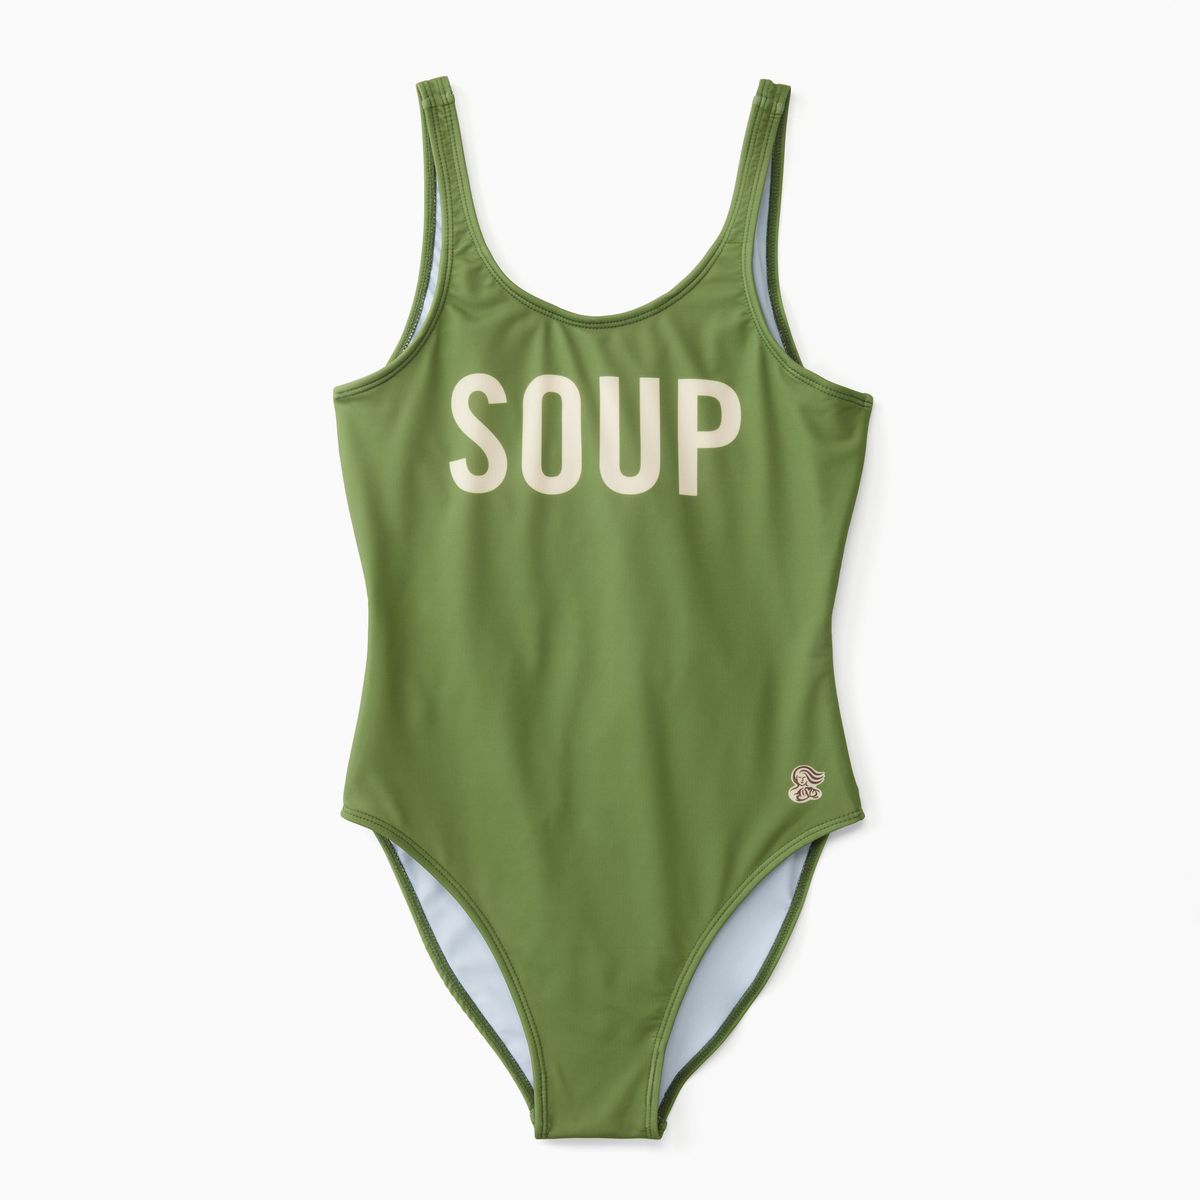 panera soup swimsuit